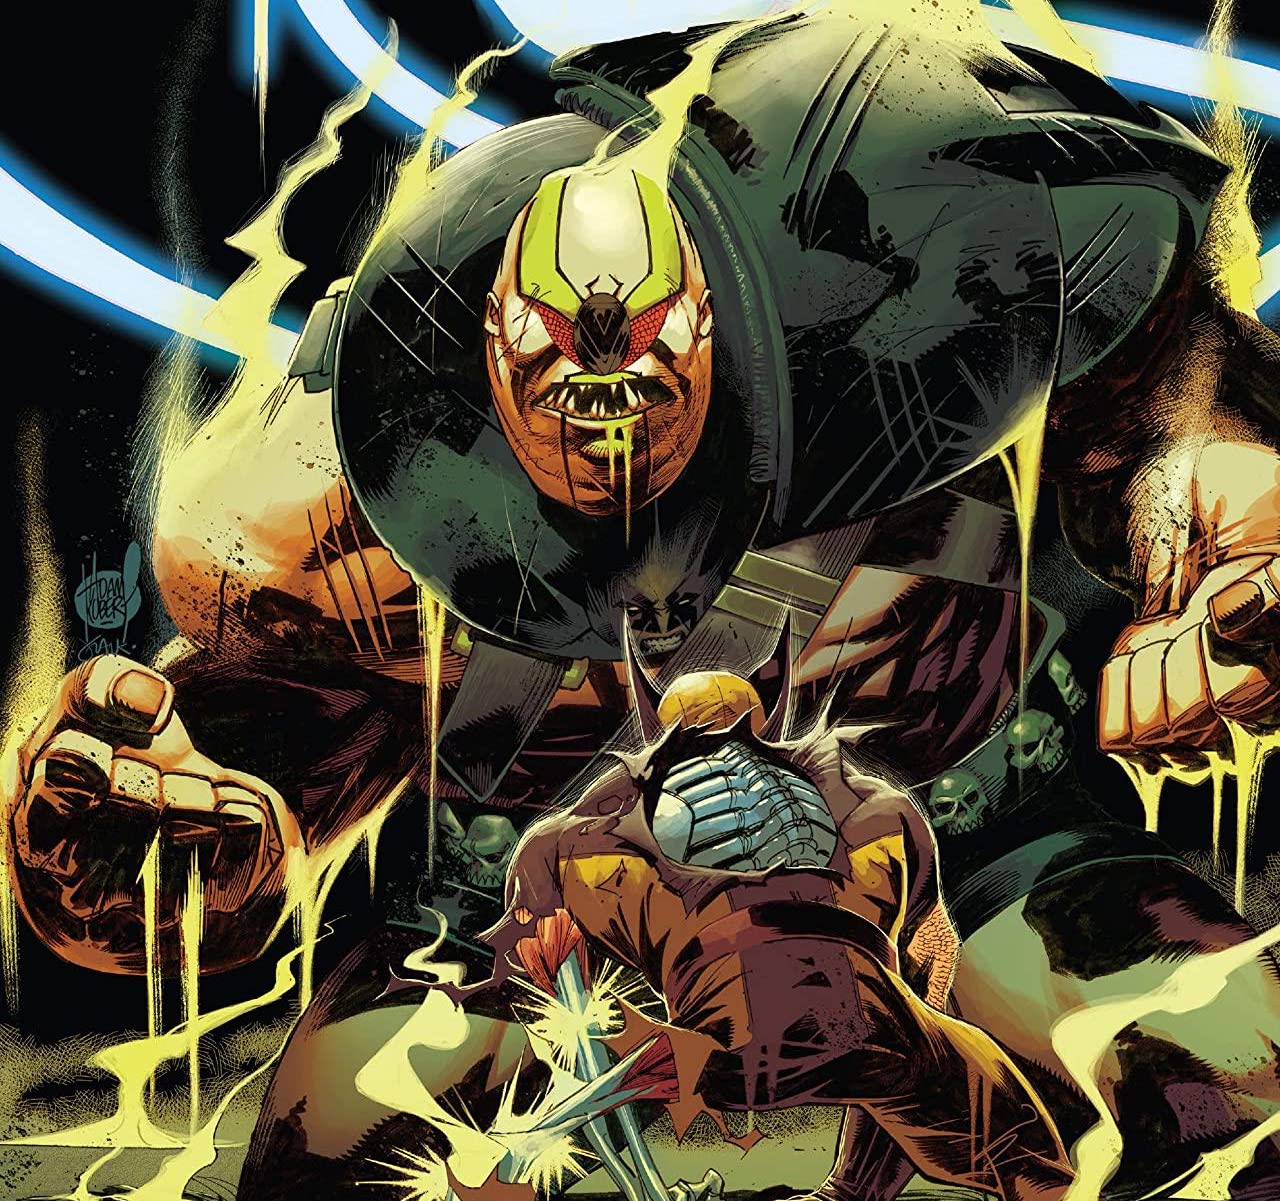 'Wolverine' #15 reveals much about Solem